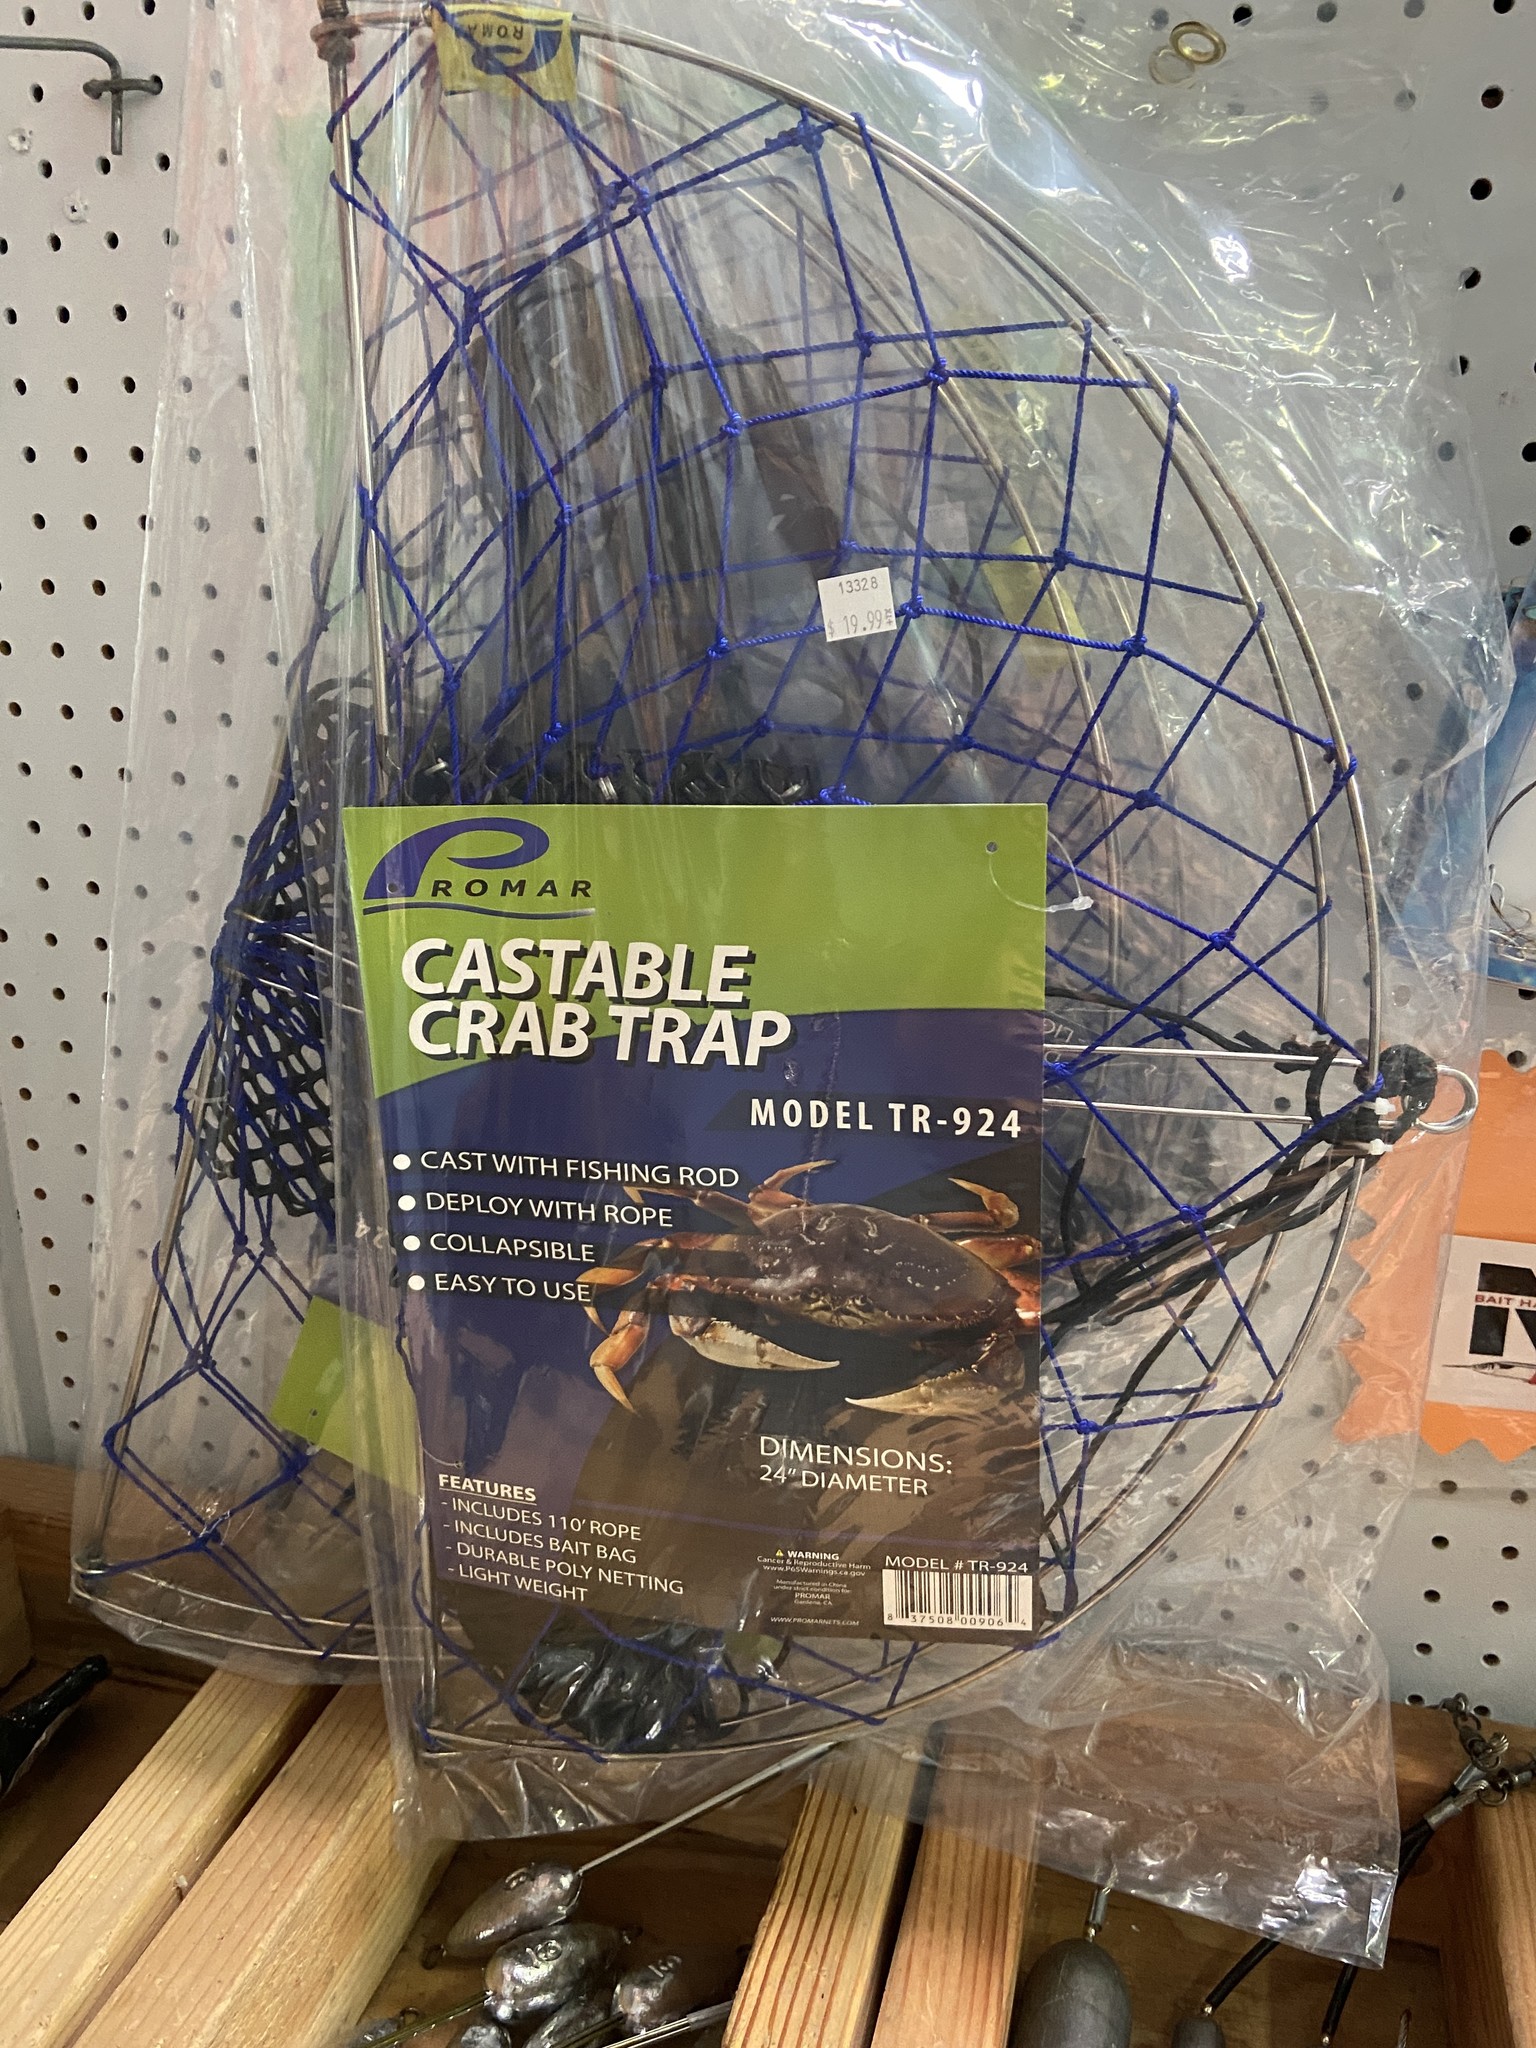 Promar Crab Cast Trap